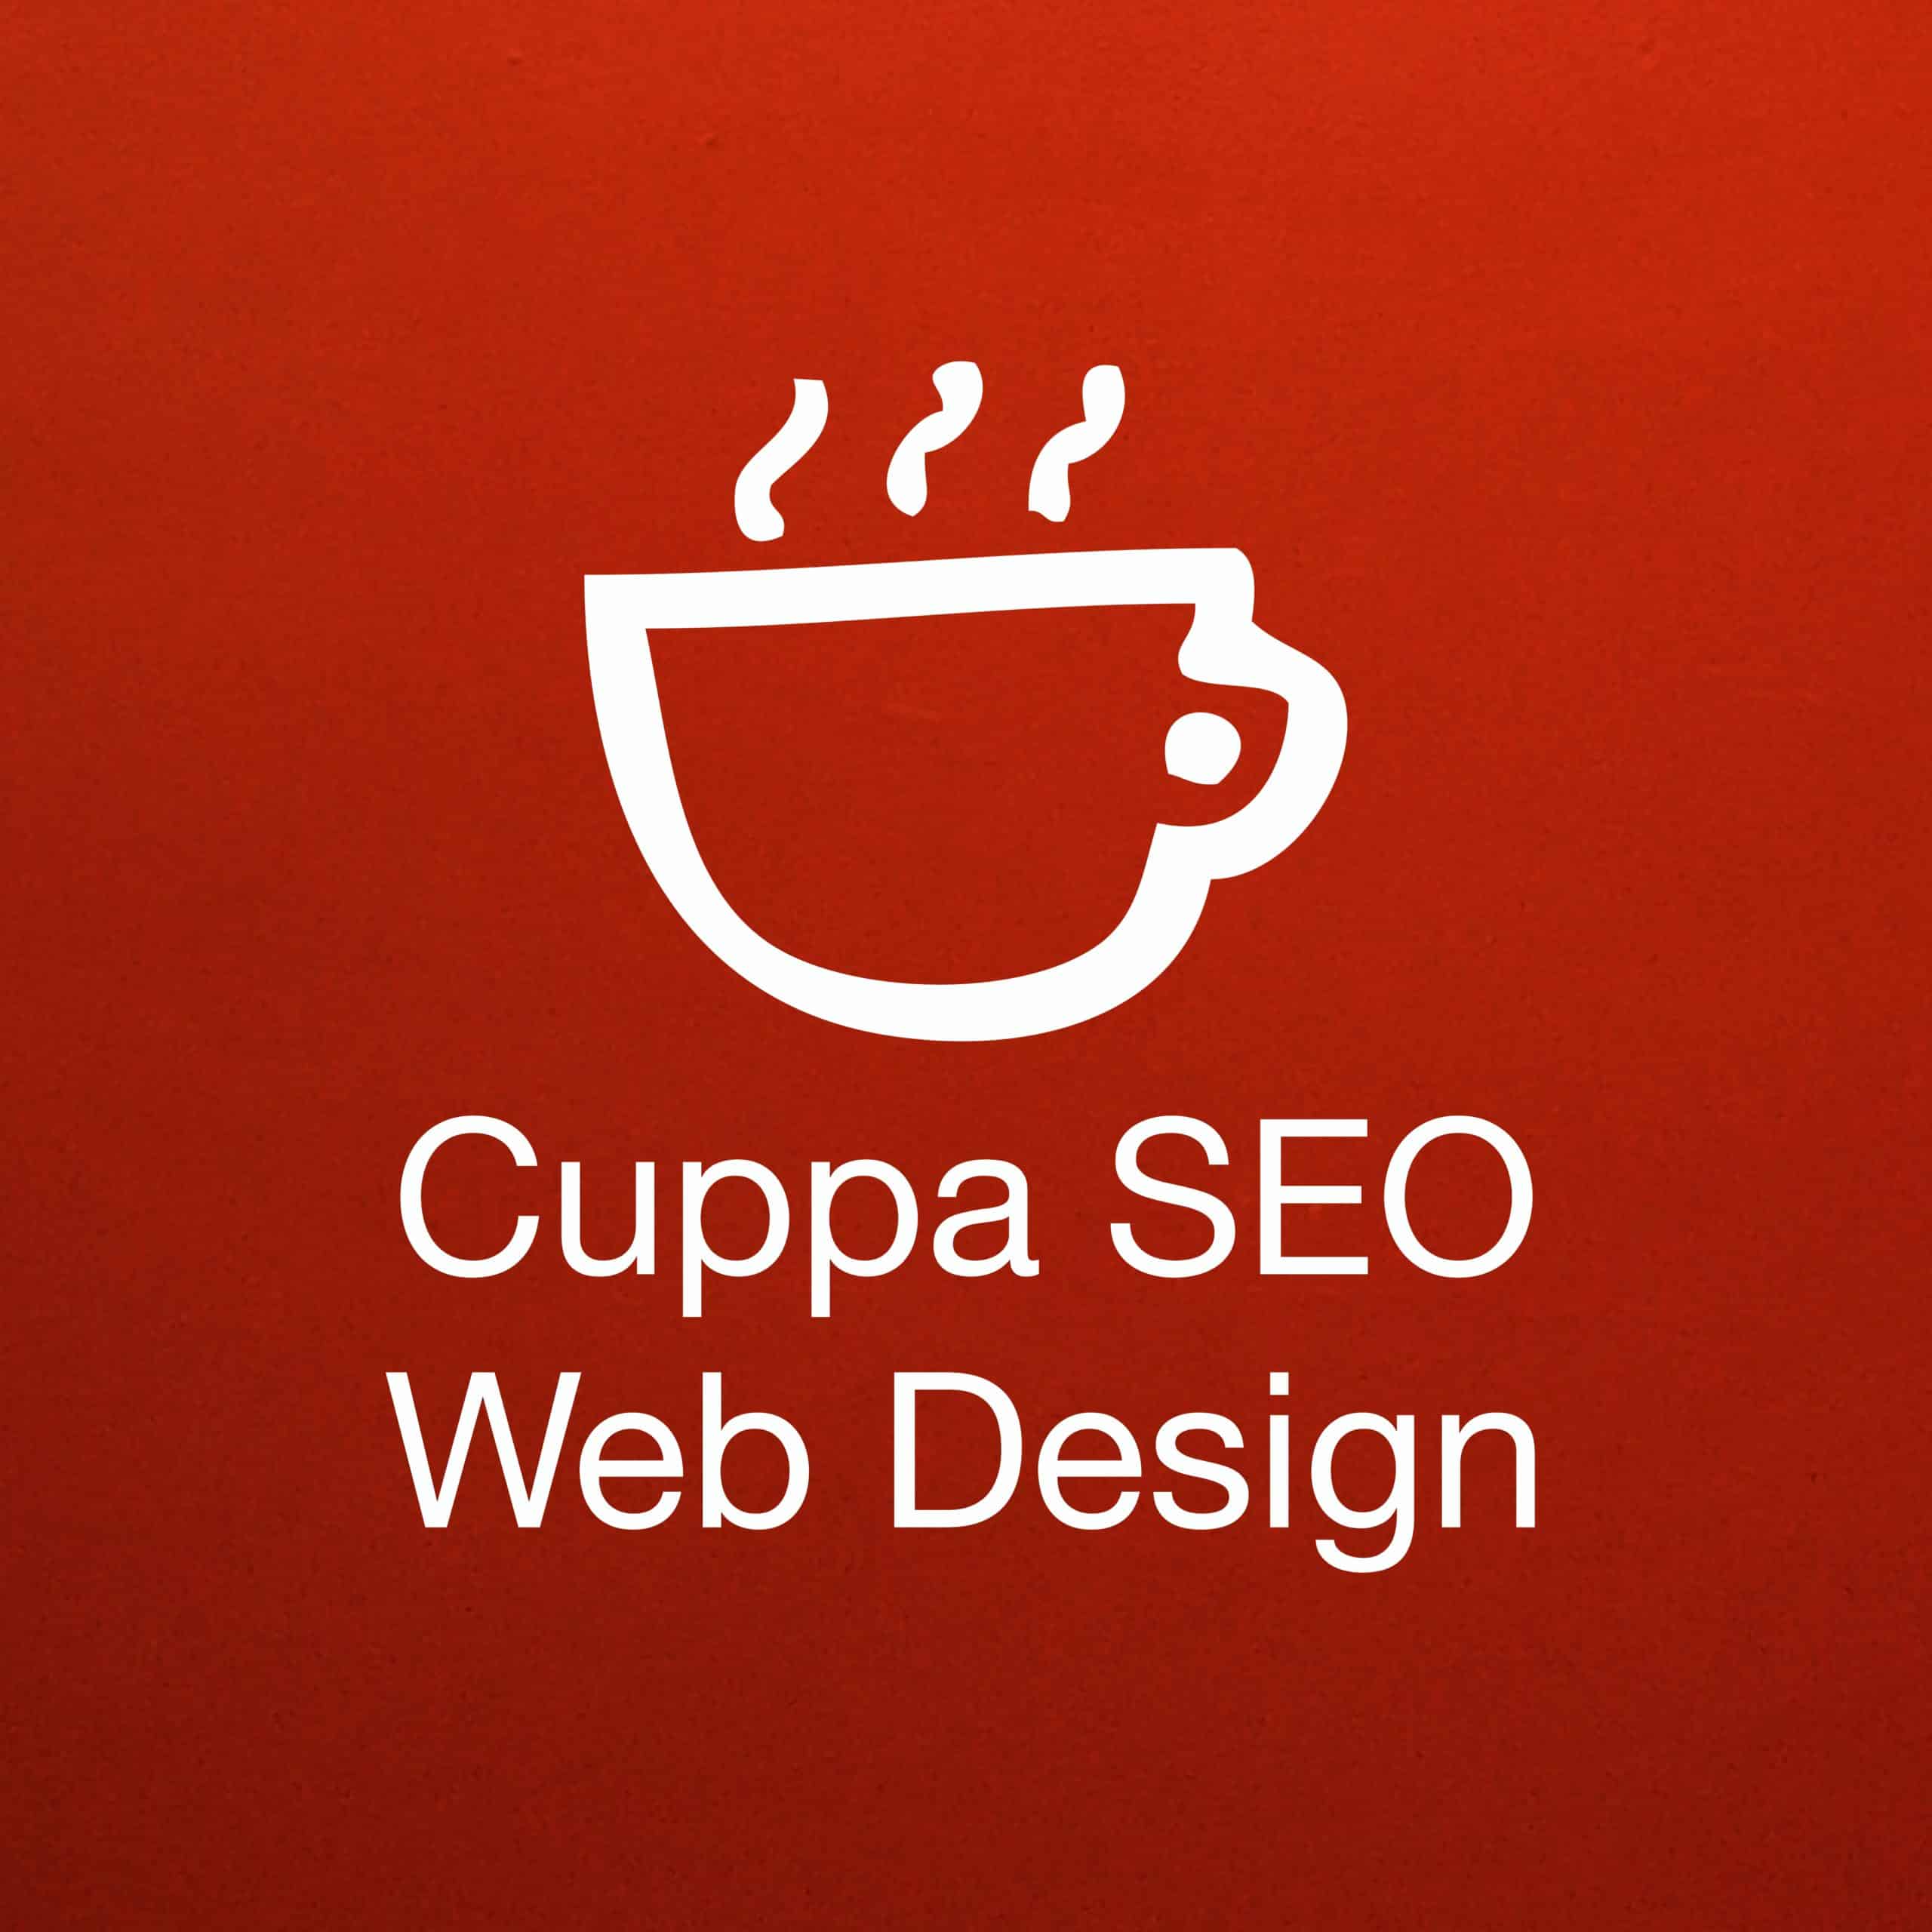 Cuppa SEO Web Design